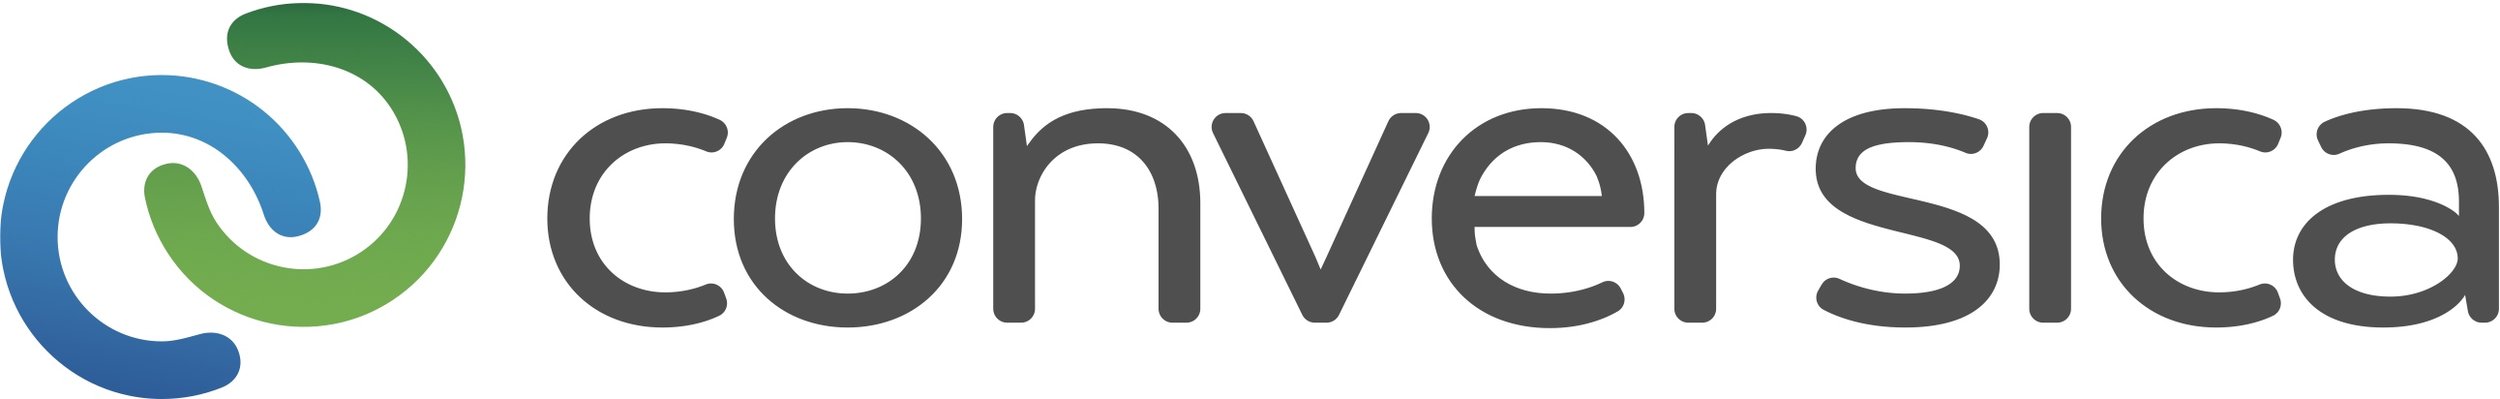 conversica-logo-horizontal.jpg